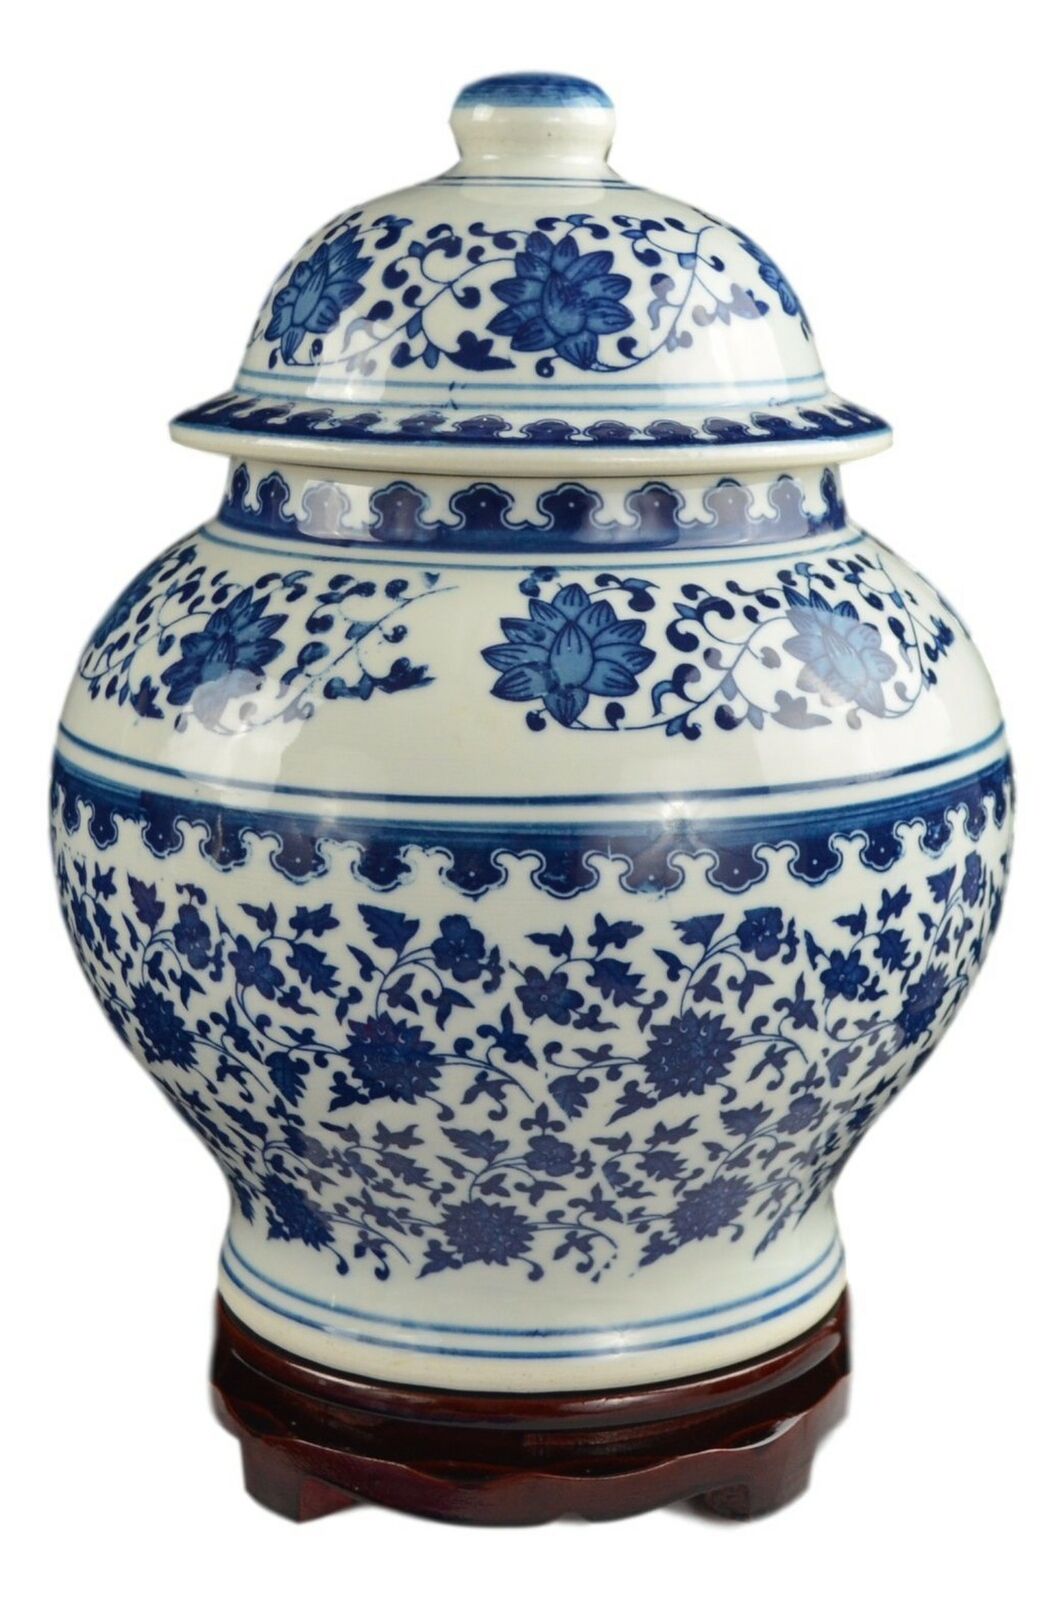 Classic Blue and White Porcelain Covered Jar Vase, China Ming Style, Jingdezh...